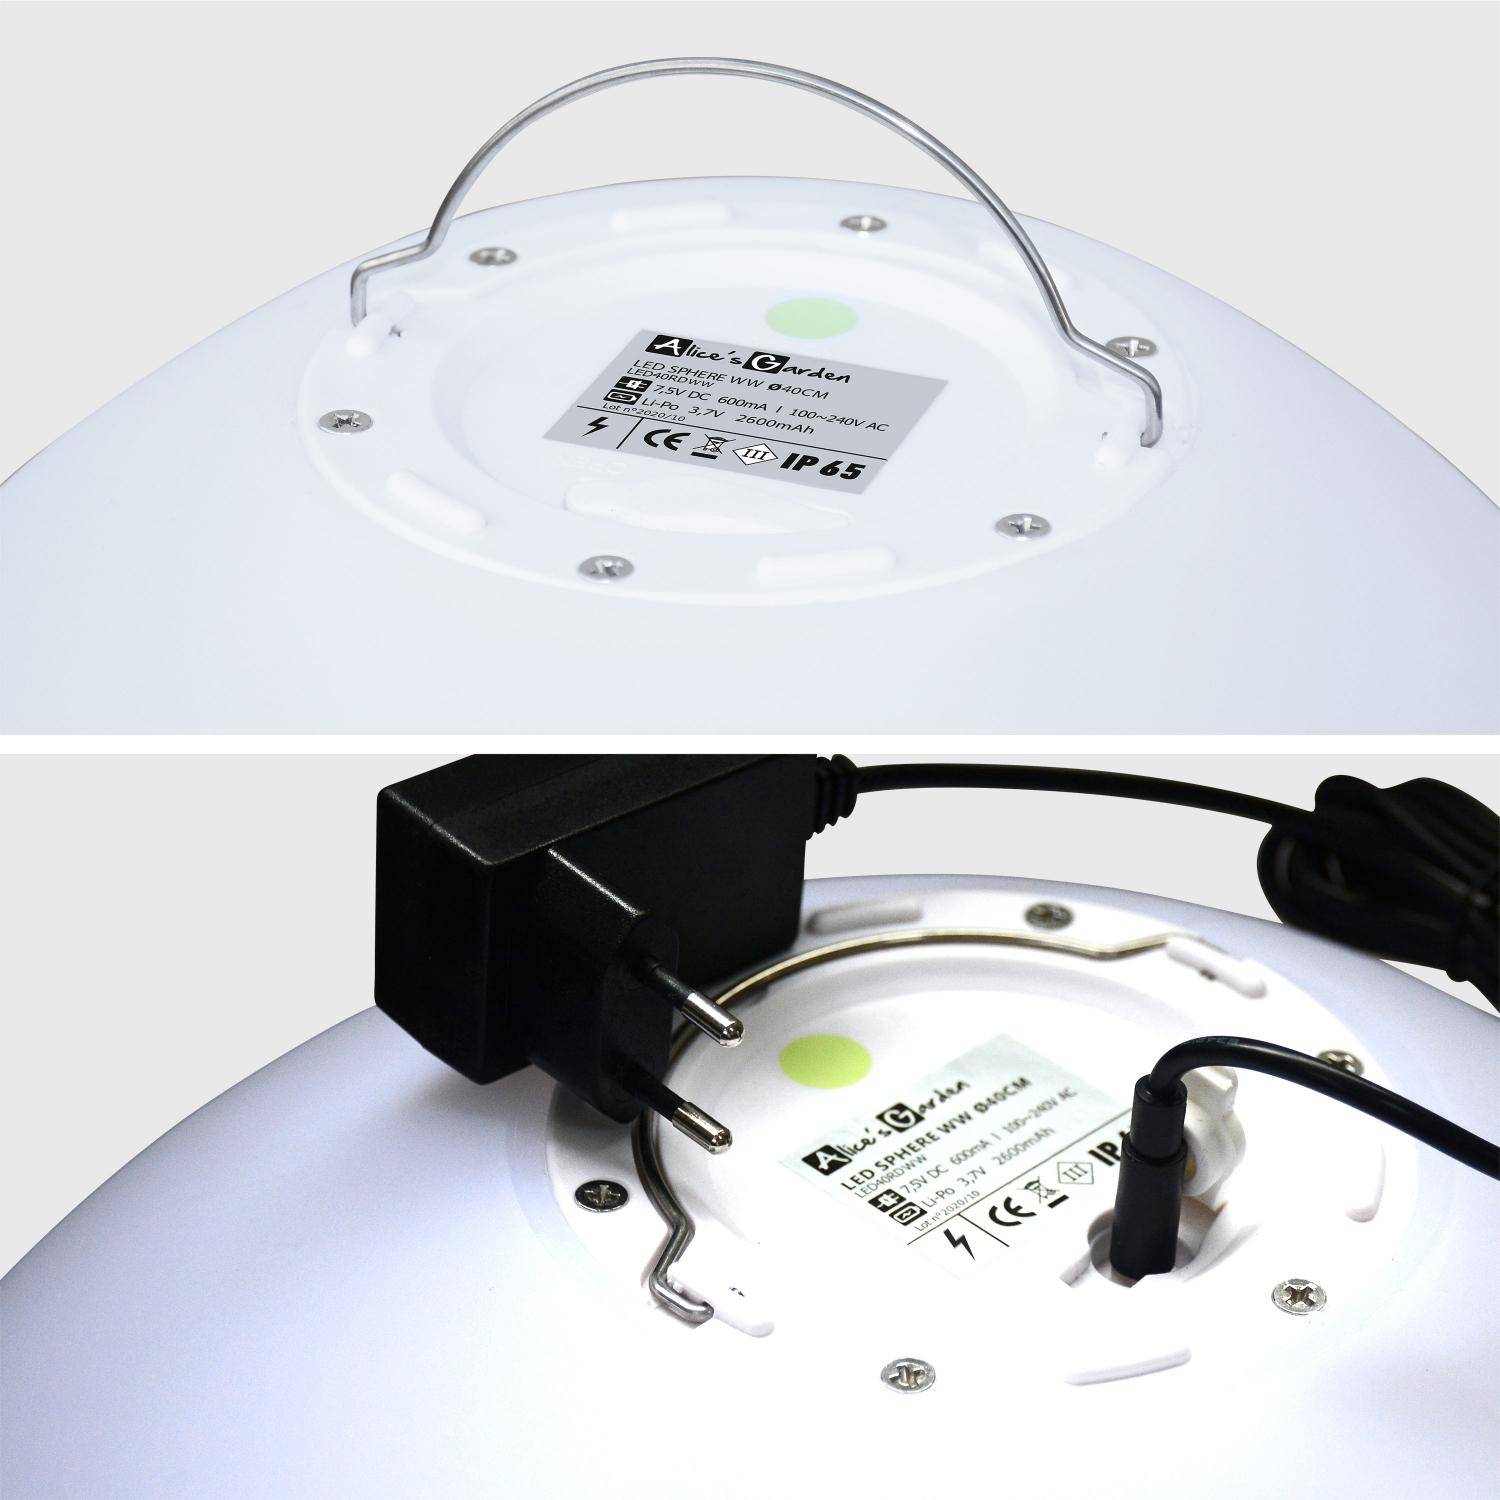 40cm spherical LED lamp – Decorative light sphere, remote control, Warm white Photo4